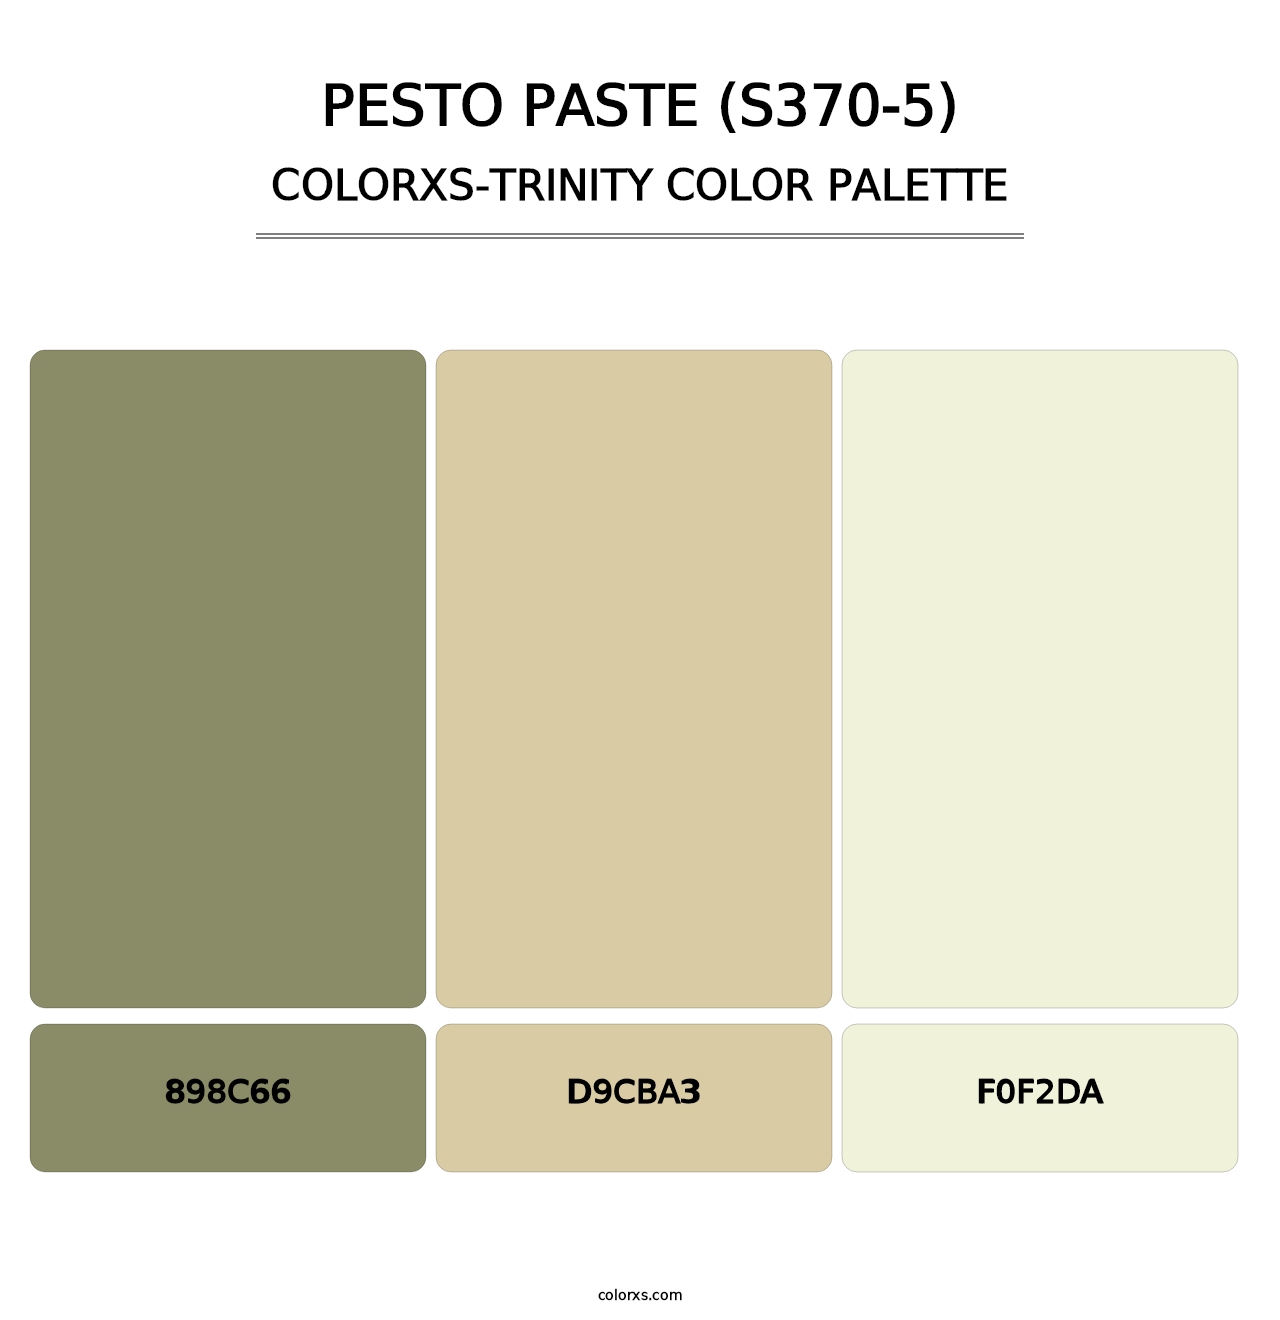 Pesto Paste (S370-5) - Colorxs Trinity Palette